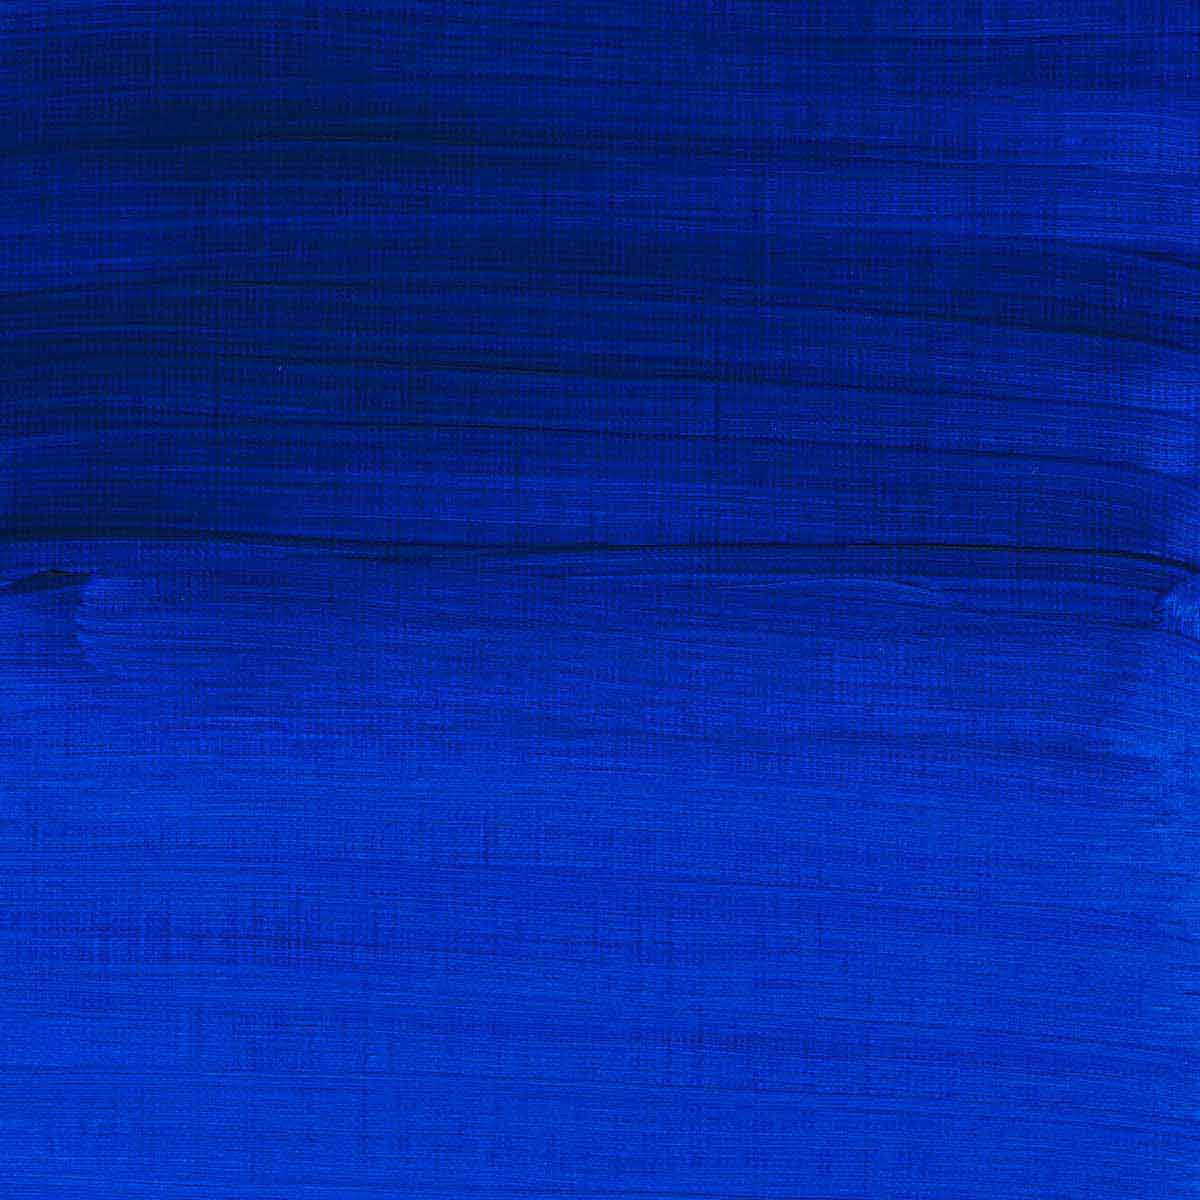 Winsor and Newton - Professional Artists' Acrylic Colour - 60ml - Ultramarine Blue